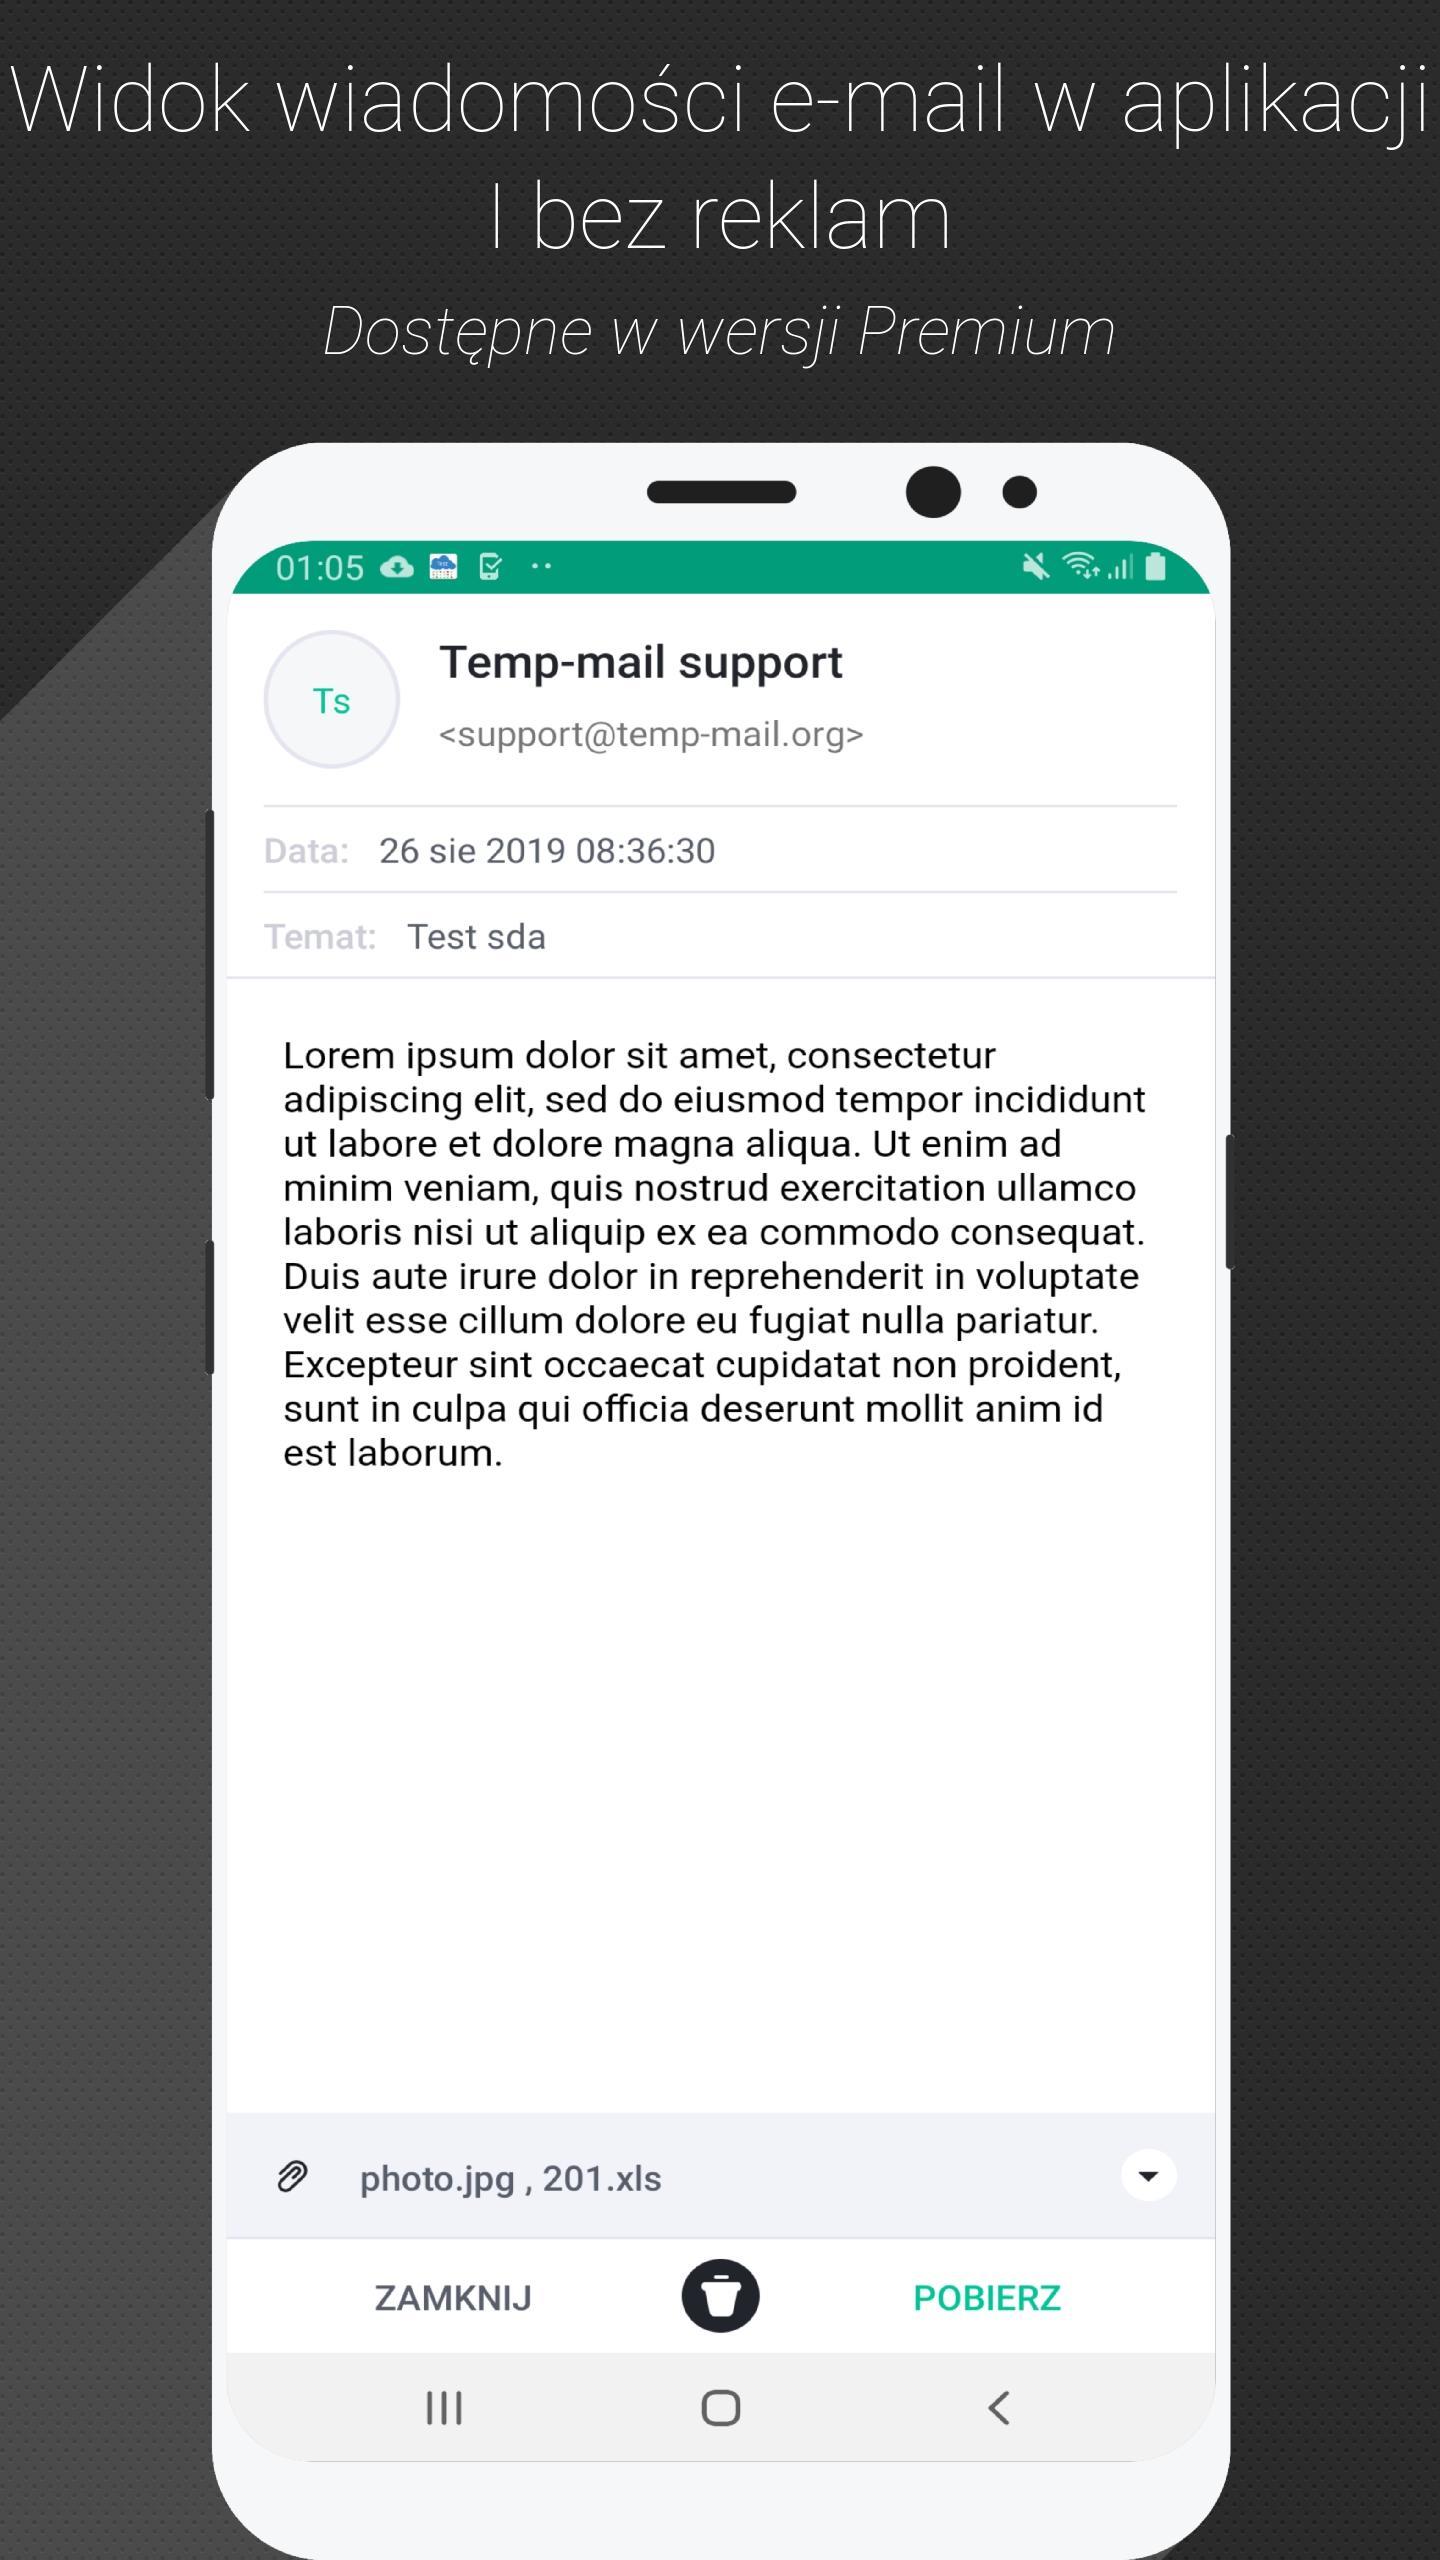 Temp Mail - Tymczasowy jednorazowy e-mail for Android - APK Download